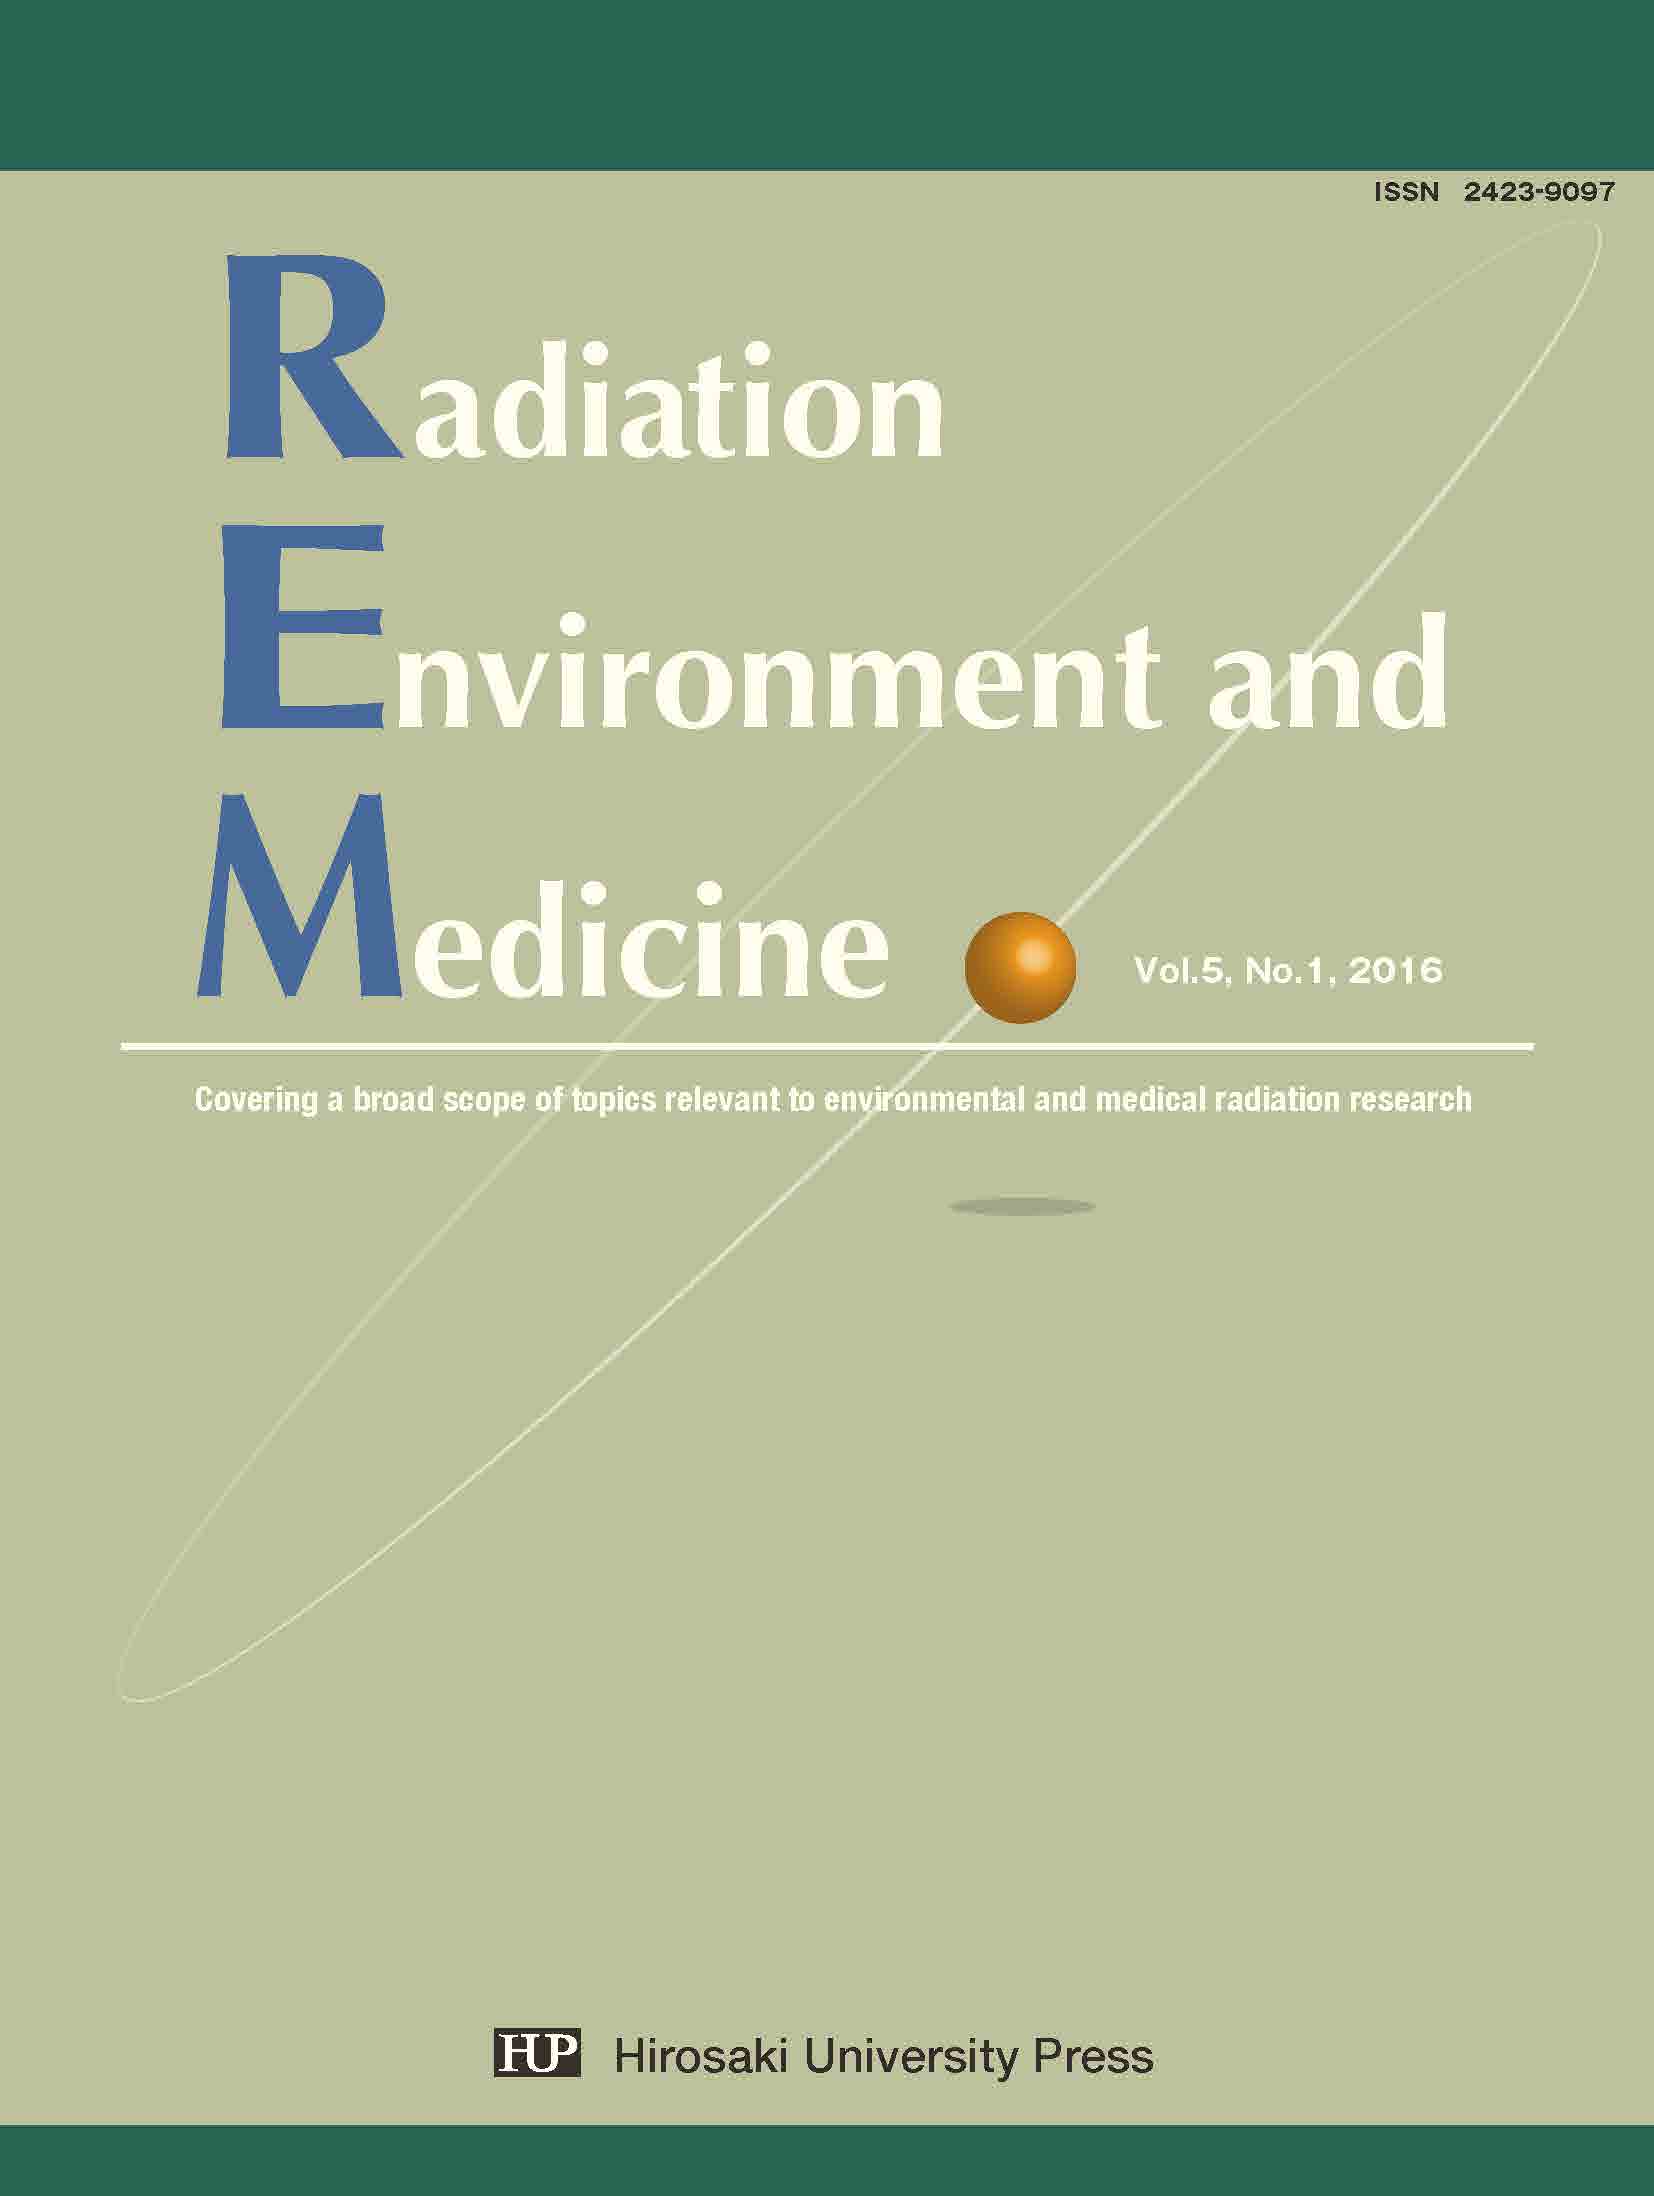 Radiation Environment and Medicine Vol.5, No.1 cover